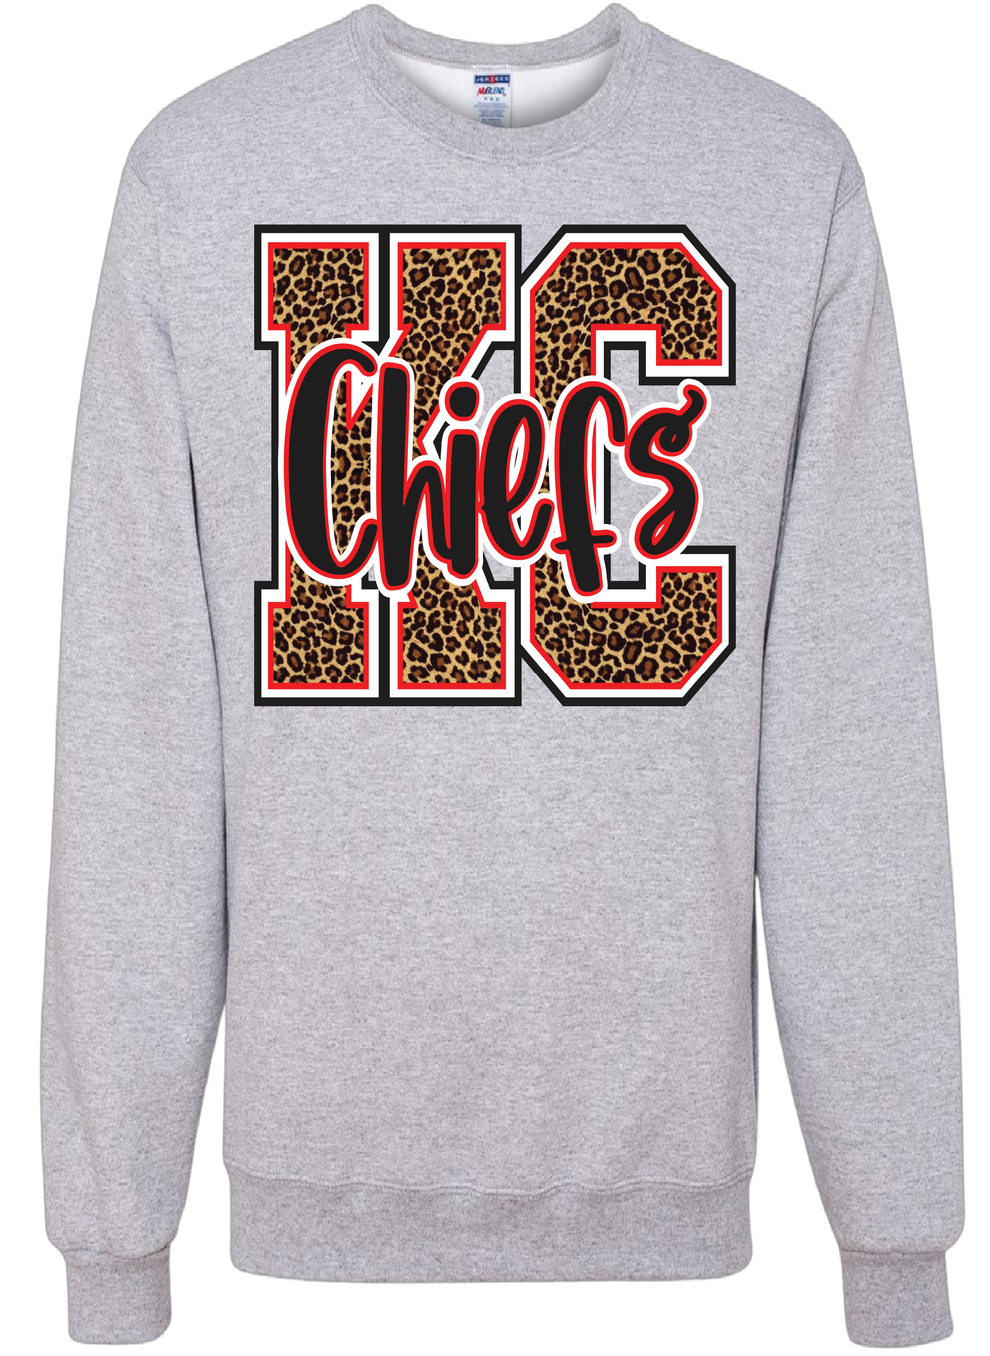 Jerzee Brand sweatshirt - kc chiefs this is a sublimation sweatshirt ...